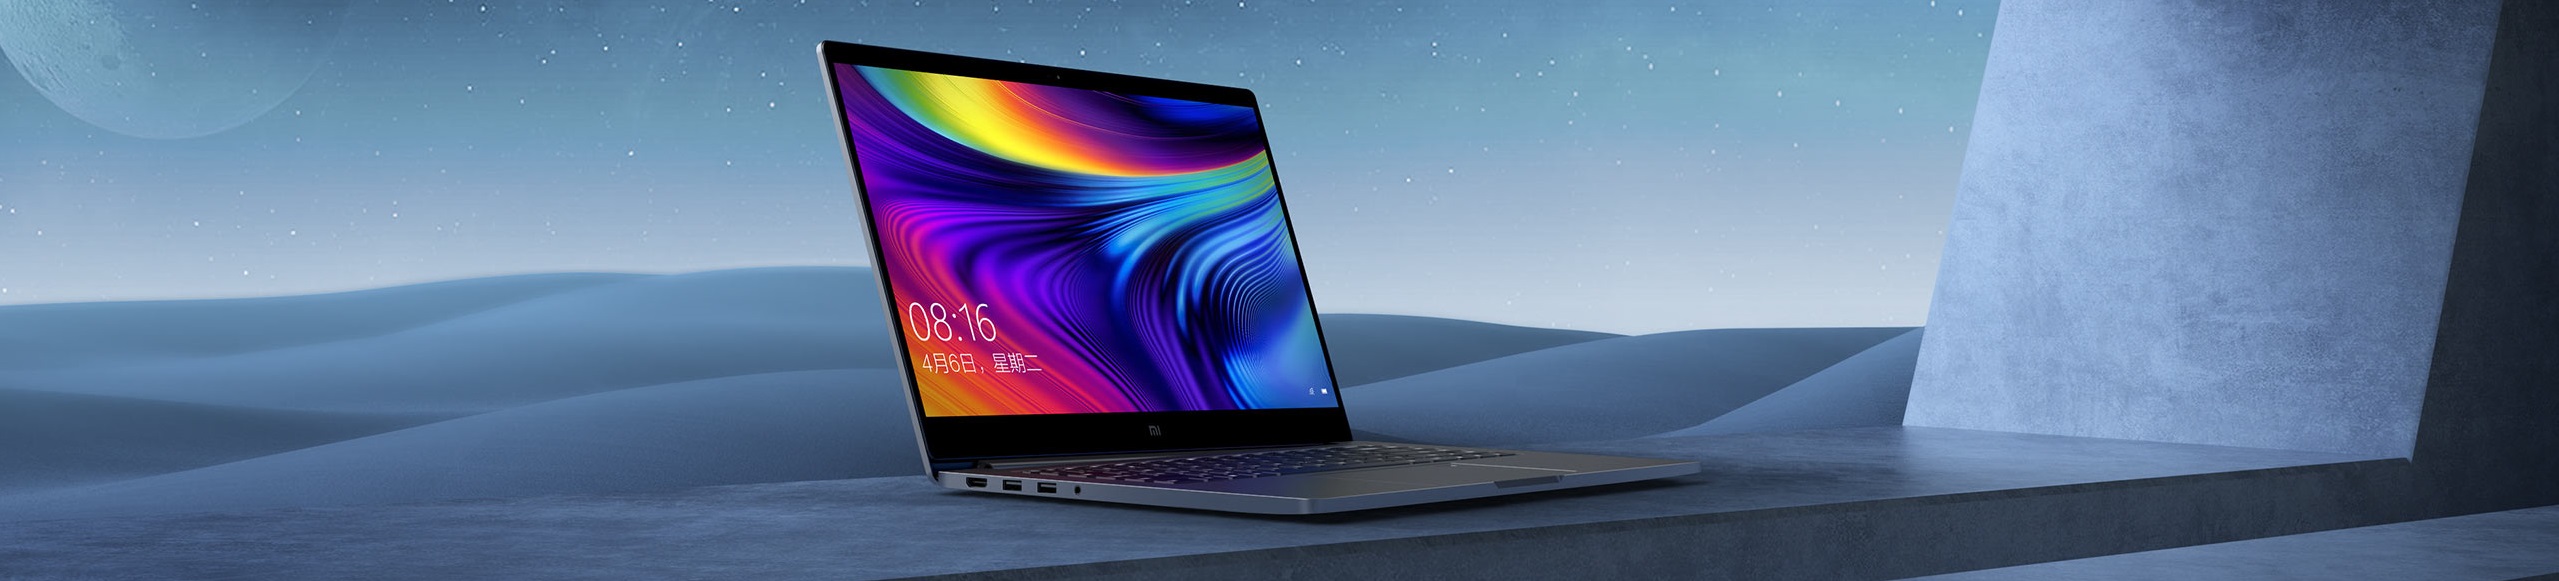 Xiaomi Mi Notebook 15 Pro 2020 laptop